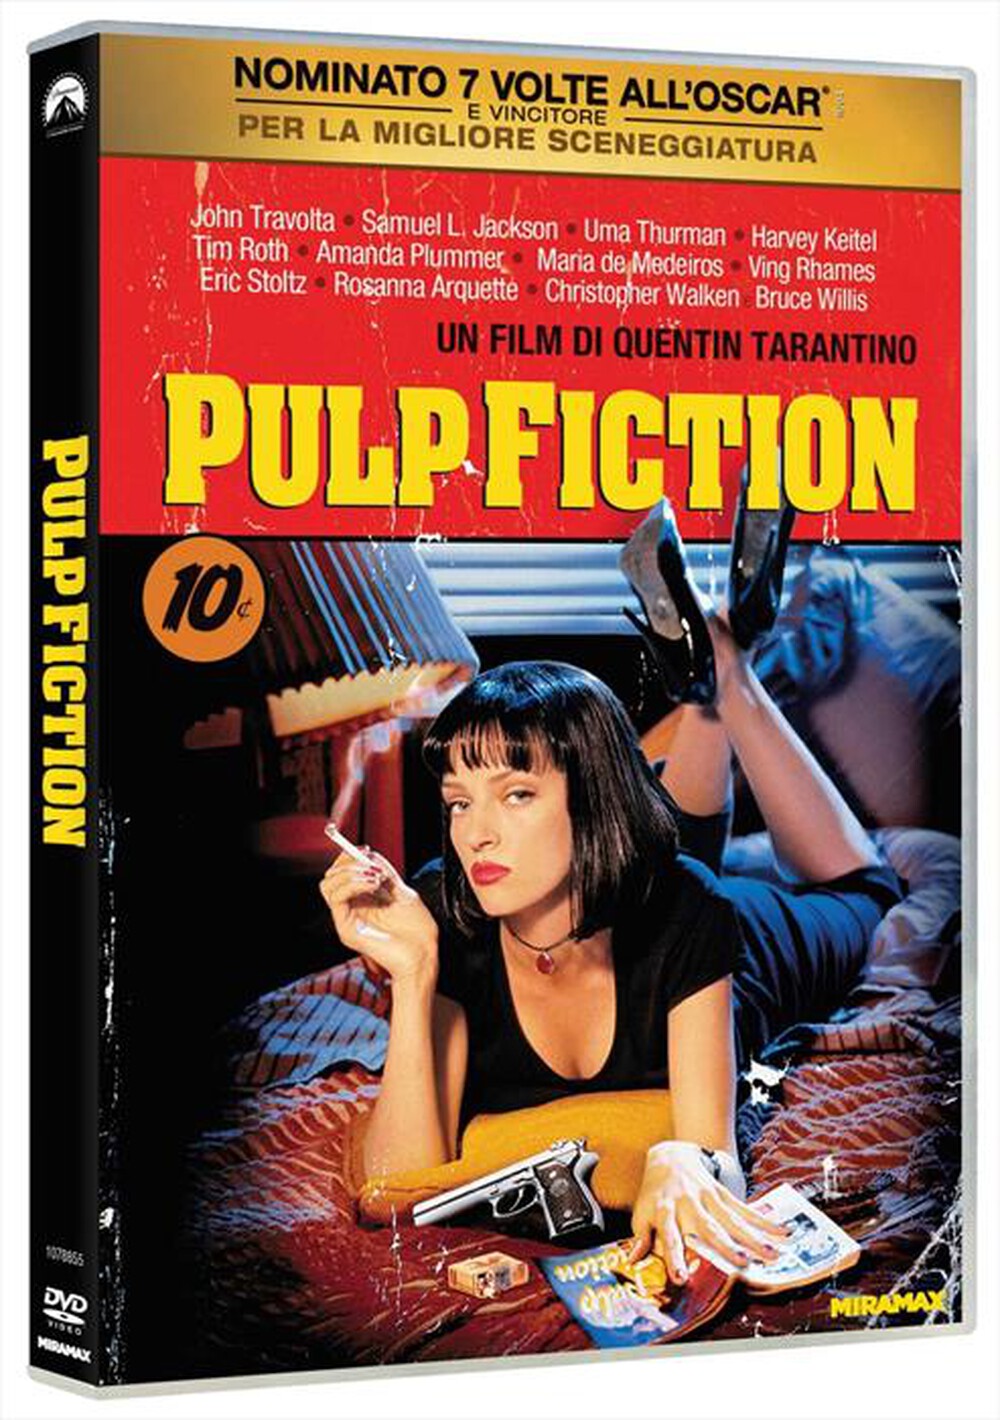 "Paramount Pictures - Pulp Fiction"